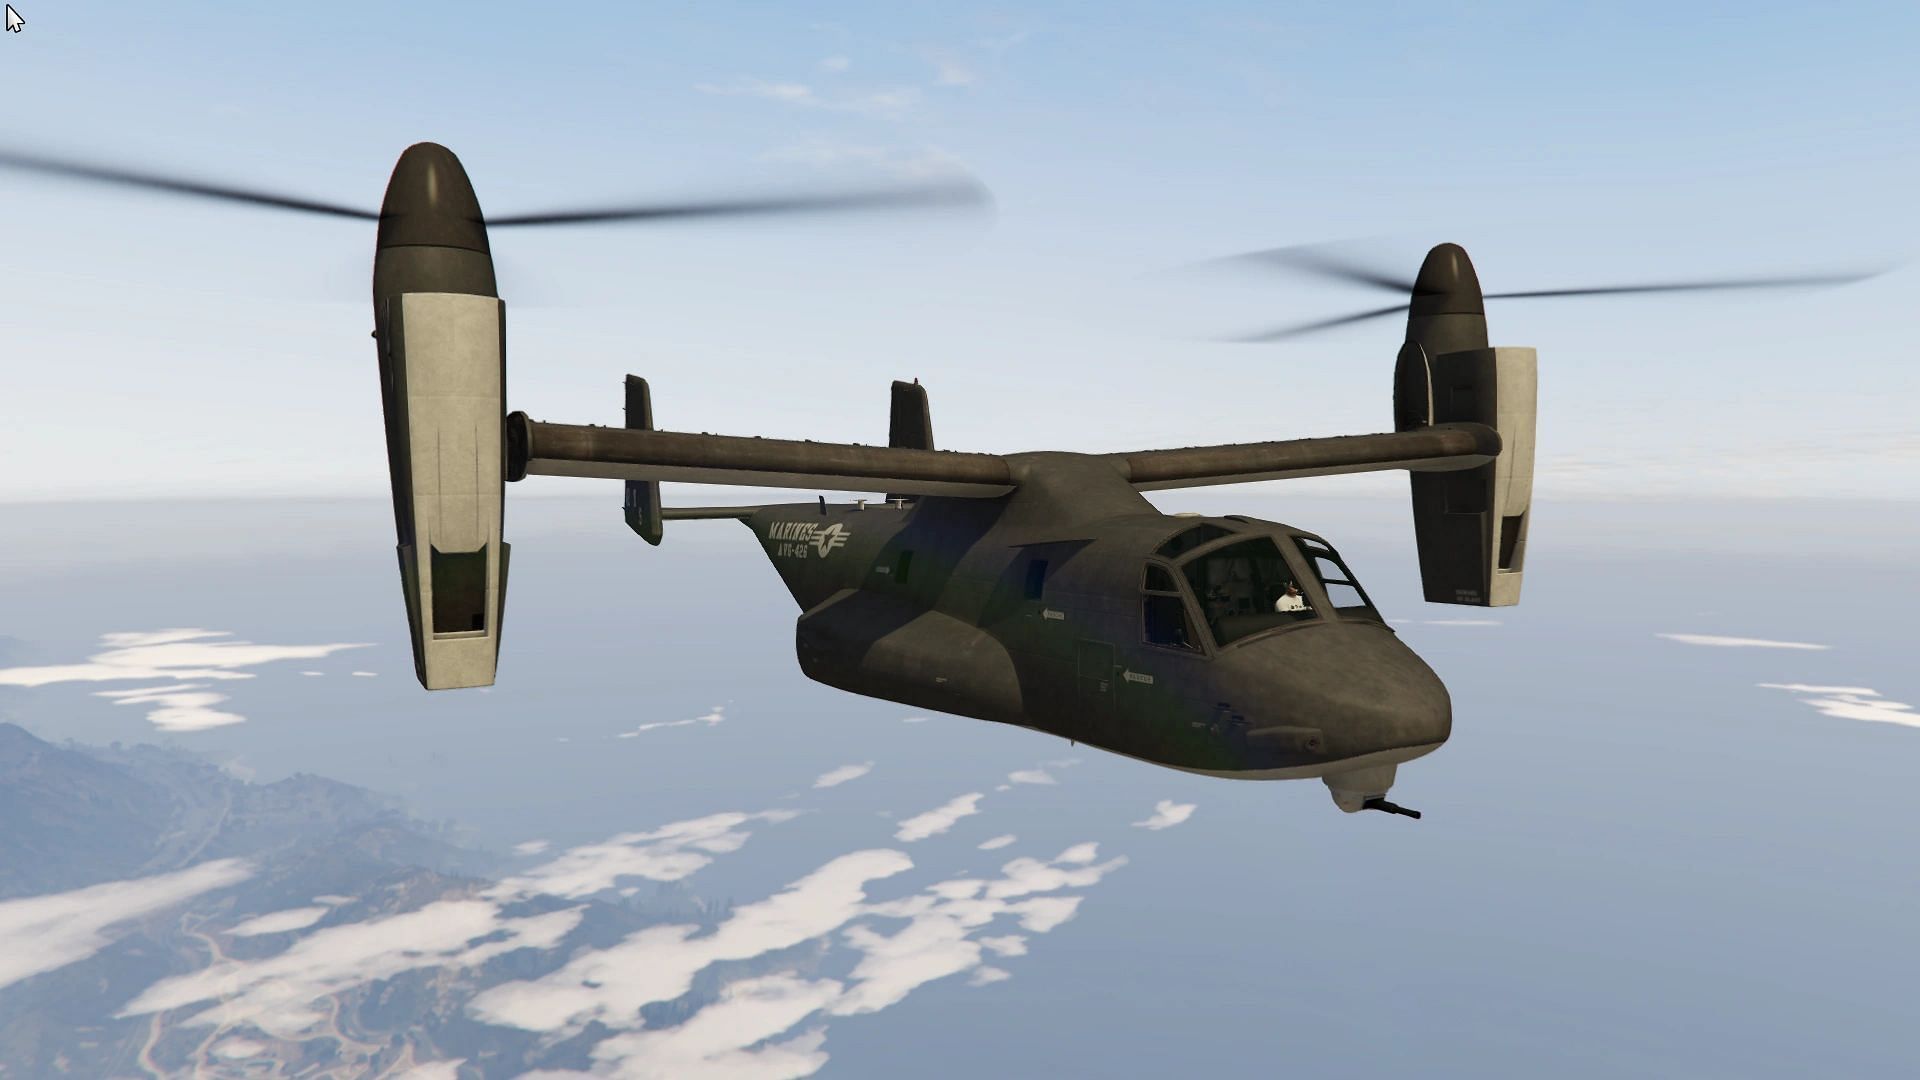 This unique aircraft has a VTOL mode (Image via Rockstar Games)